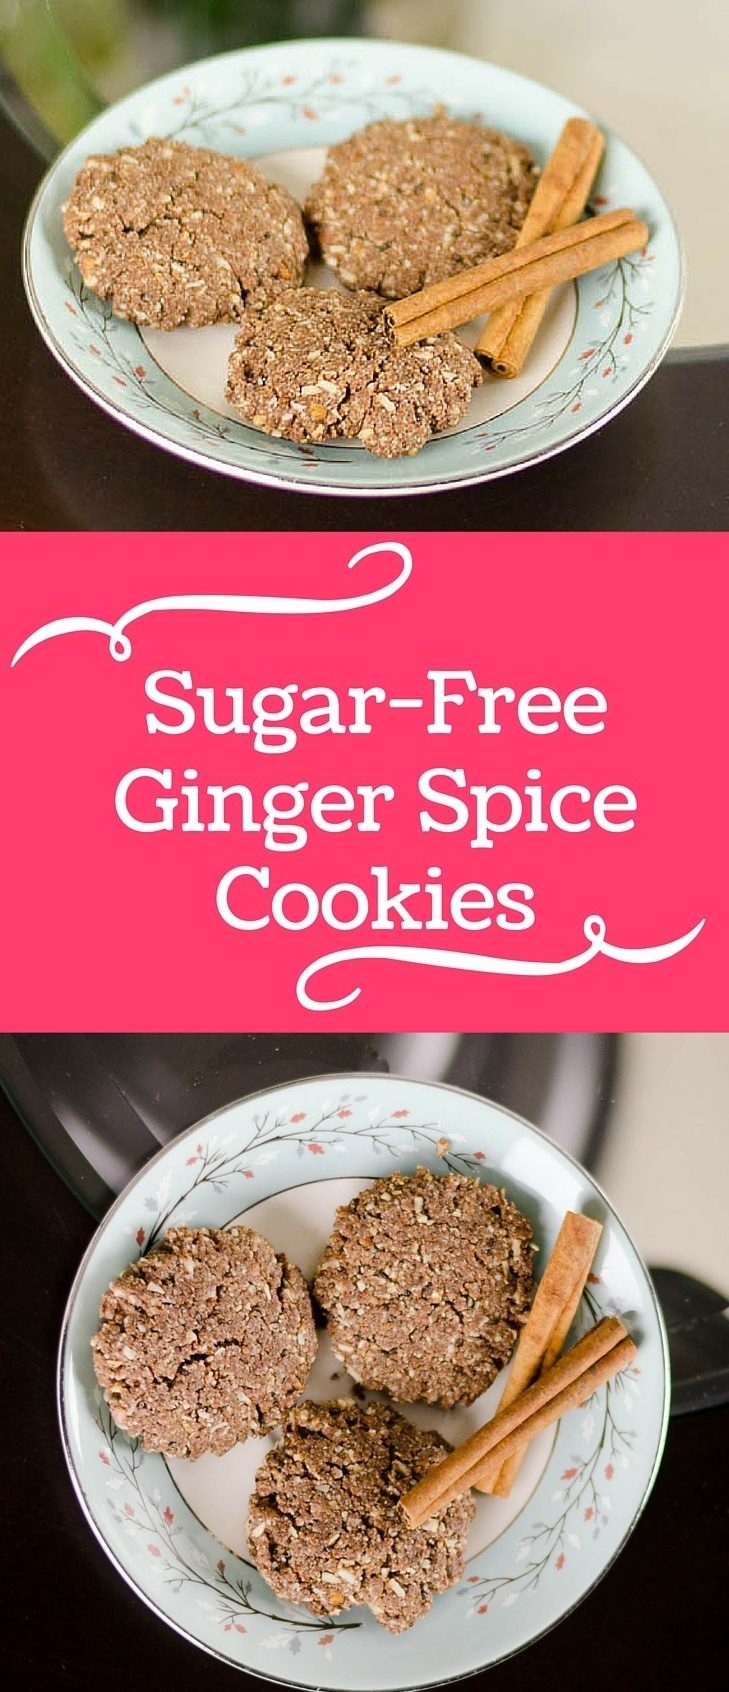 Sugar-Free Ginger Spice Cookies Recipe [Paleo, Gluten-Free, Dairy-Free] #paleo #recipes #glutenfree https://paleoflourish.com/sugar-free-ginger-spice-cookies-recipe-paleo-gf-dairyfree